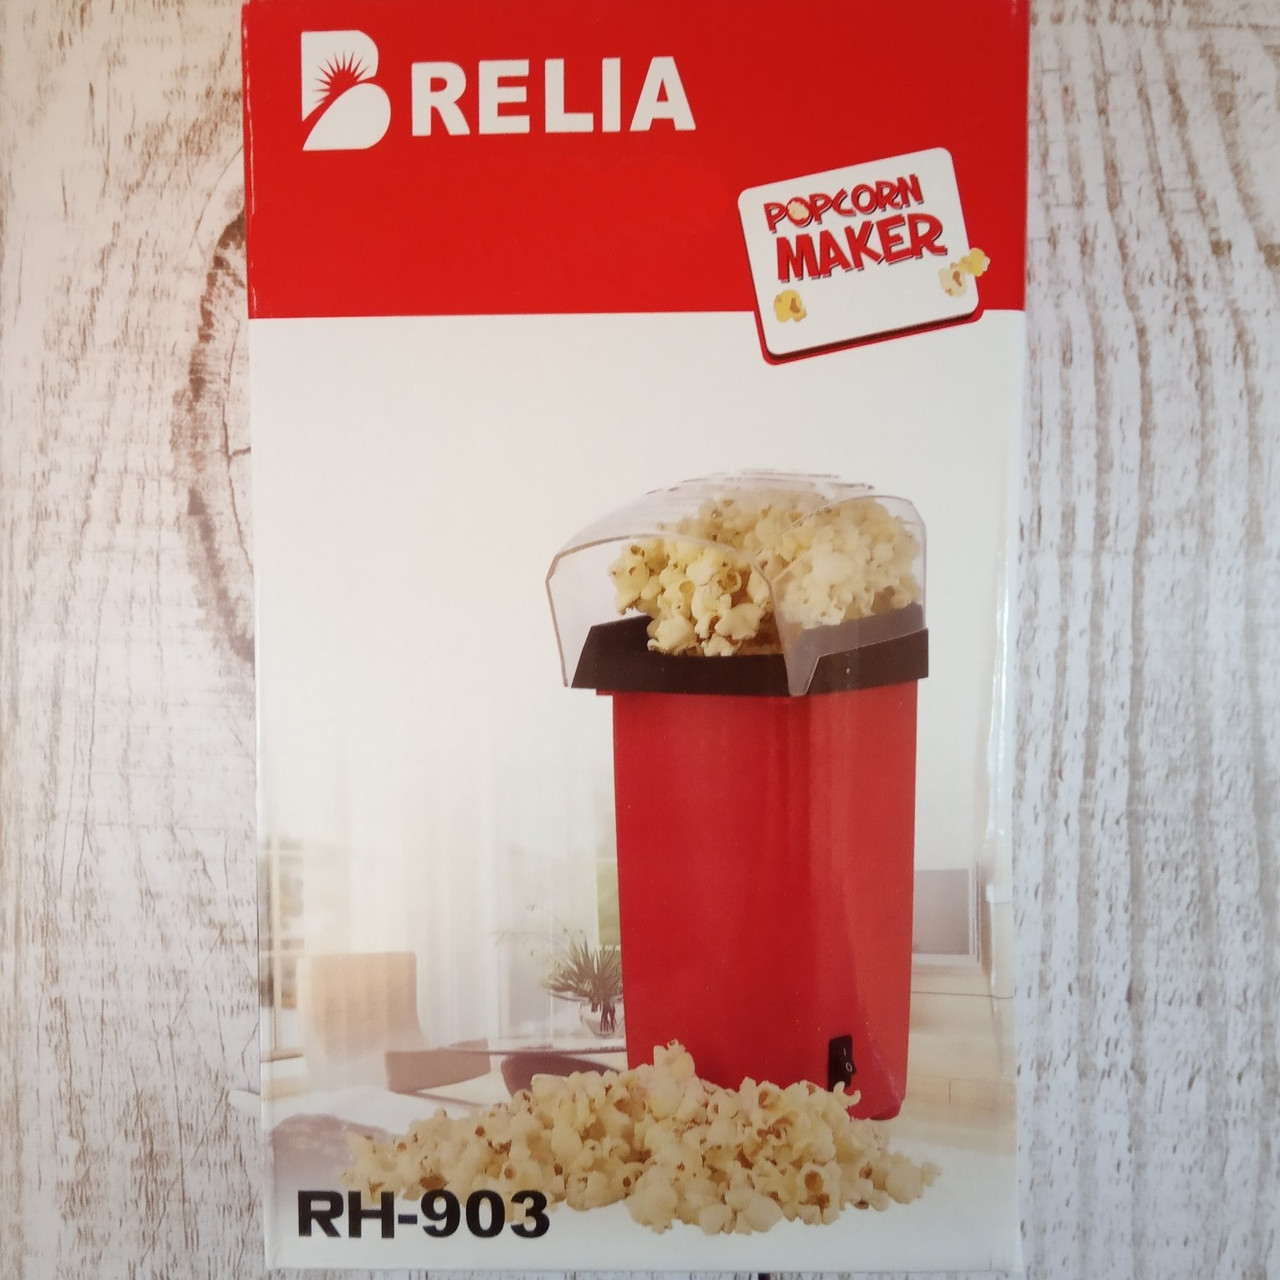 Аппарат для попкорна Relia Popcorn Maker RH-903 оптом - Фото №3